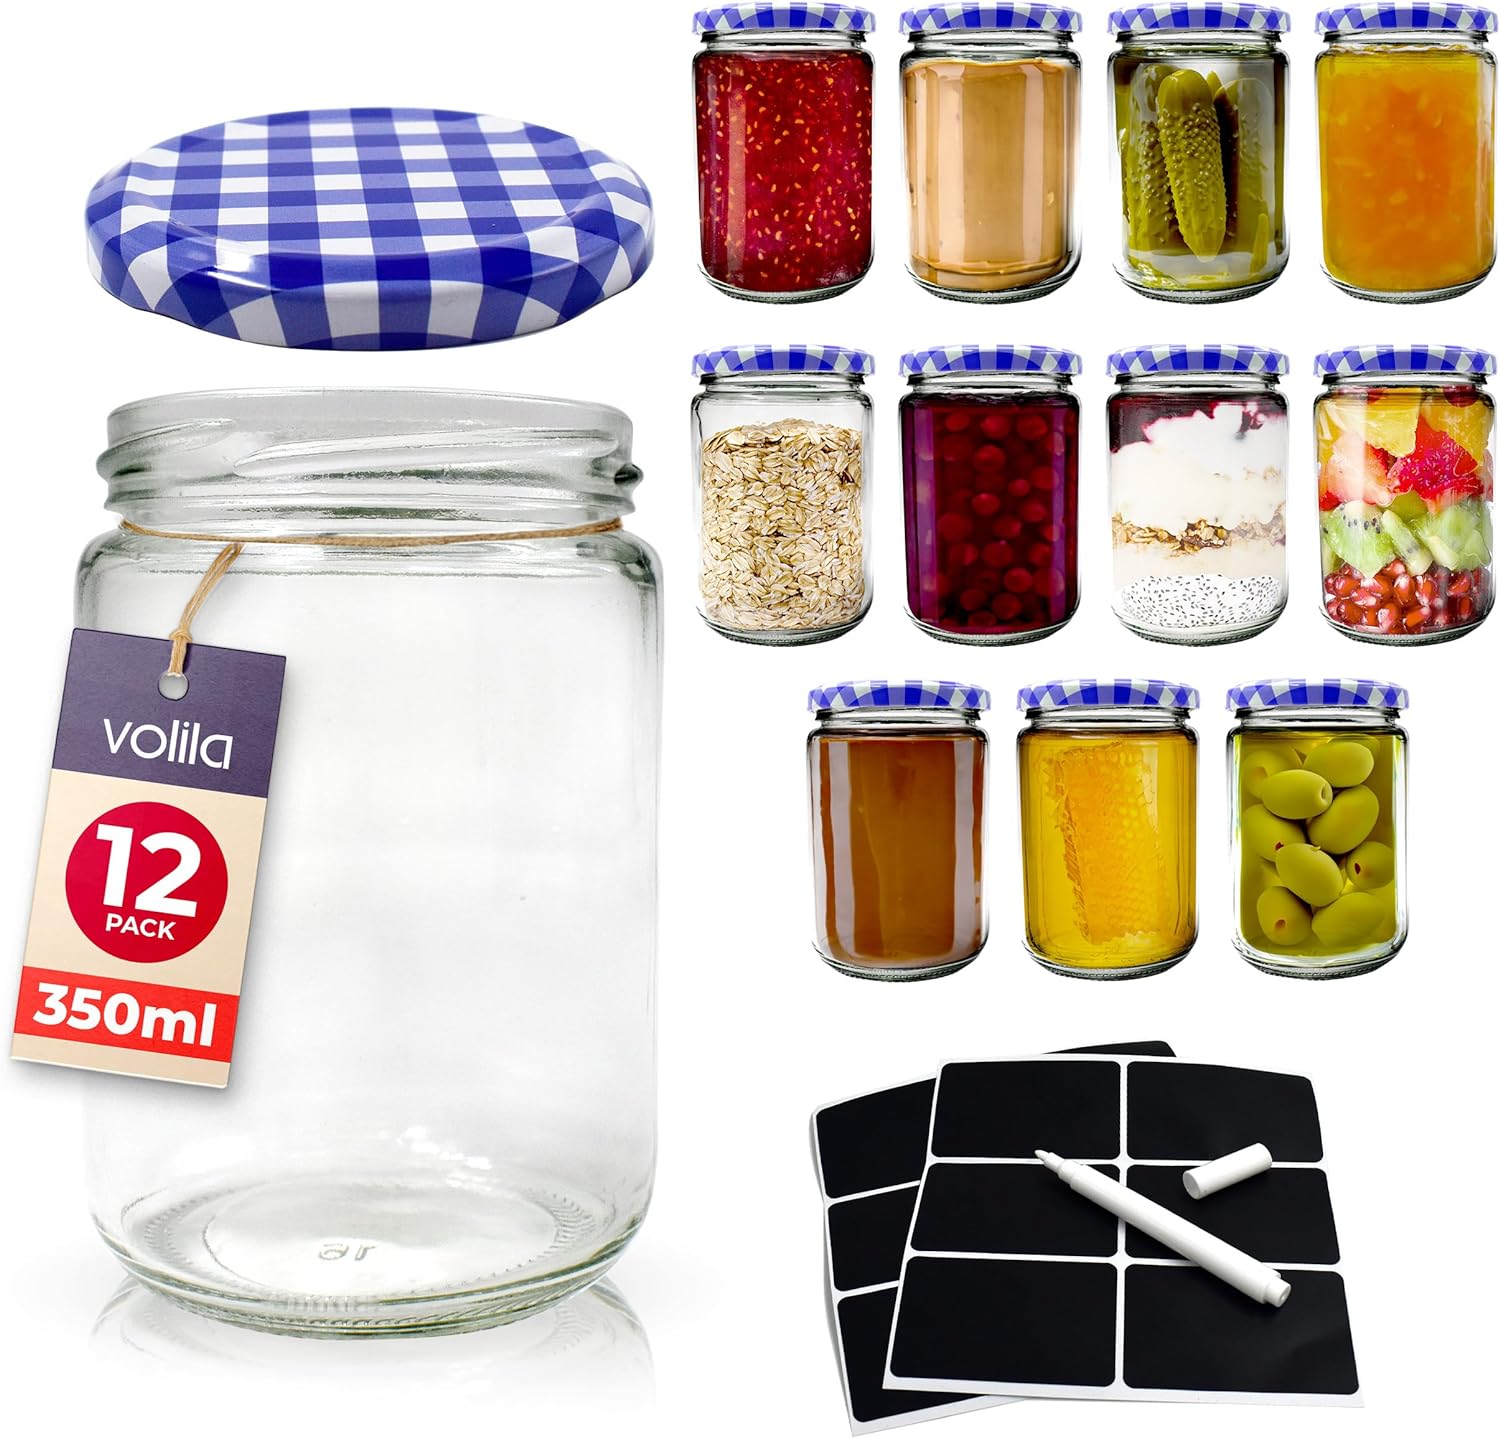 volila Jam Jars - Jars for Jam with Screw Top Lids - Airtight Glass Jars with Lids for your Homemade Jam, Marmalade and Chutney - Jam Jars with Lids